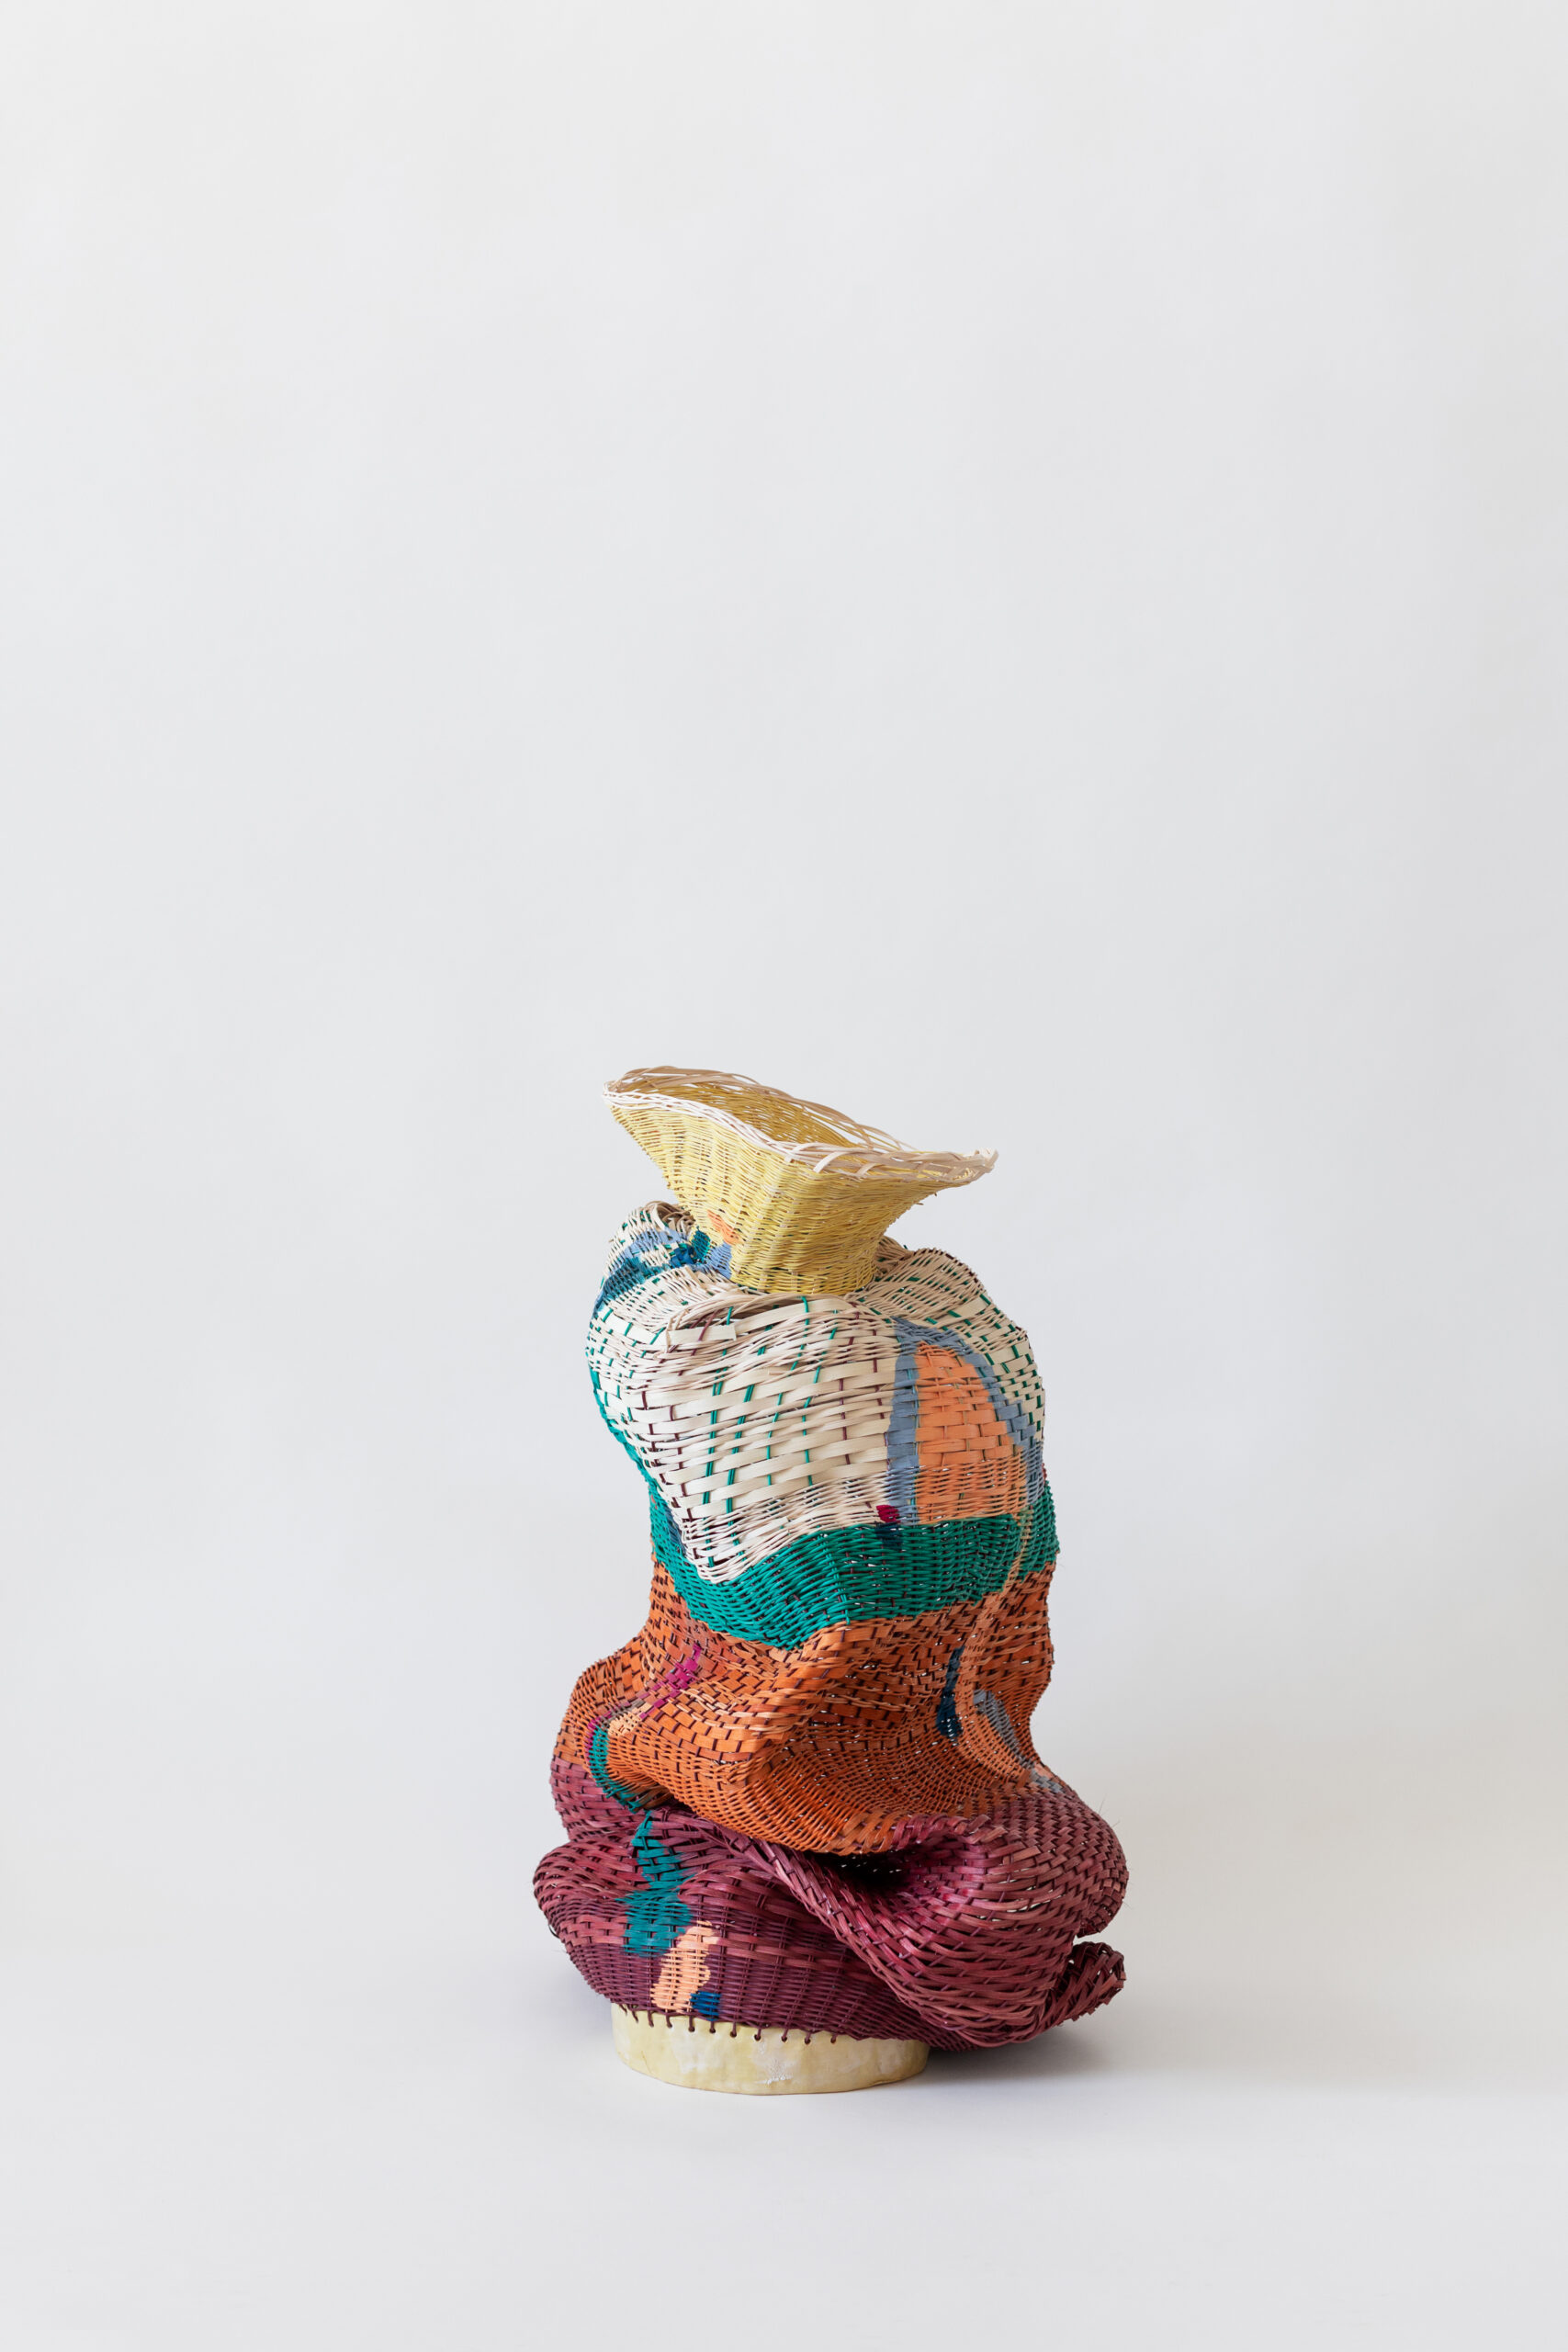 Nina Johnson, Dee Clements, Studio Herron, Weaving, Tapestry, Sculptures, Miami, Exhibition